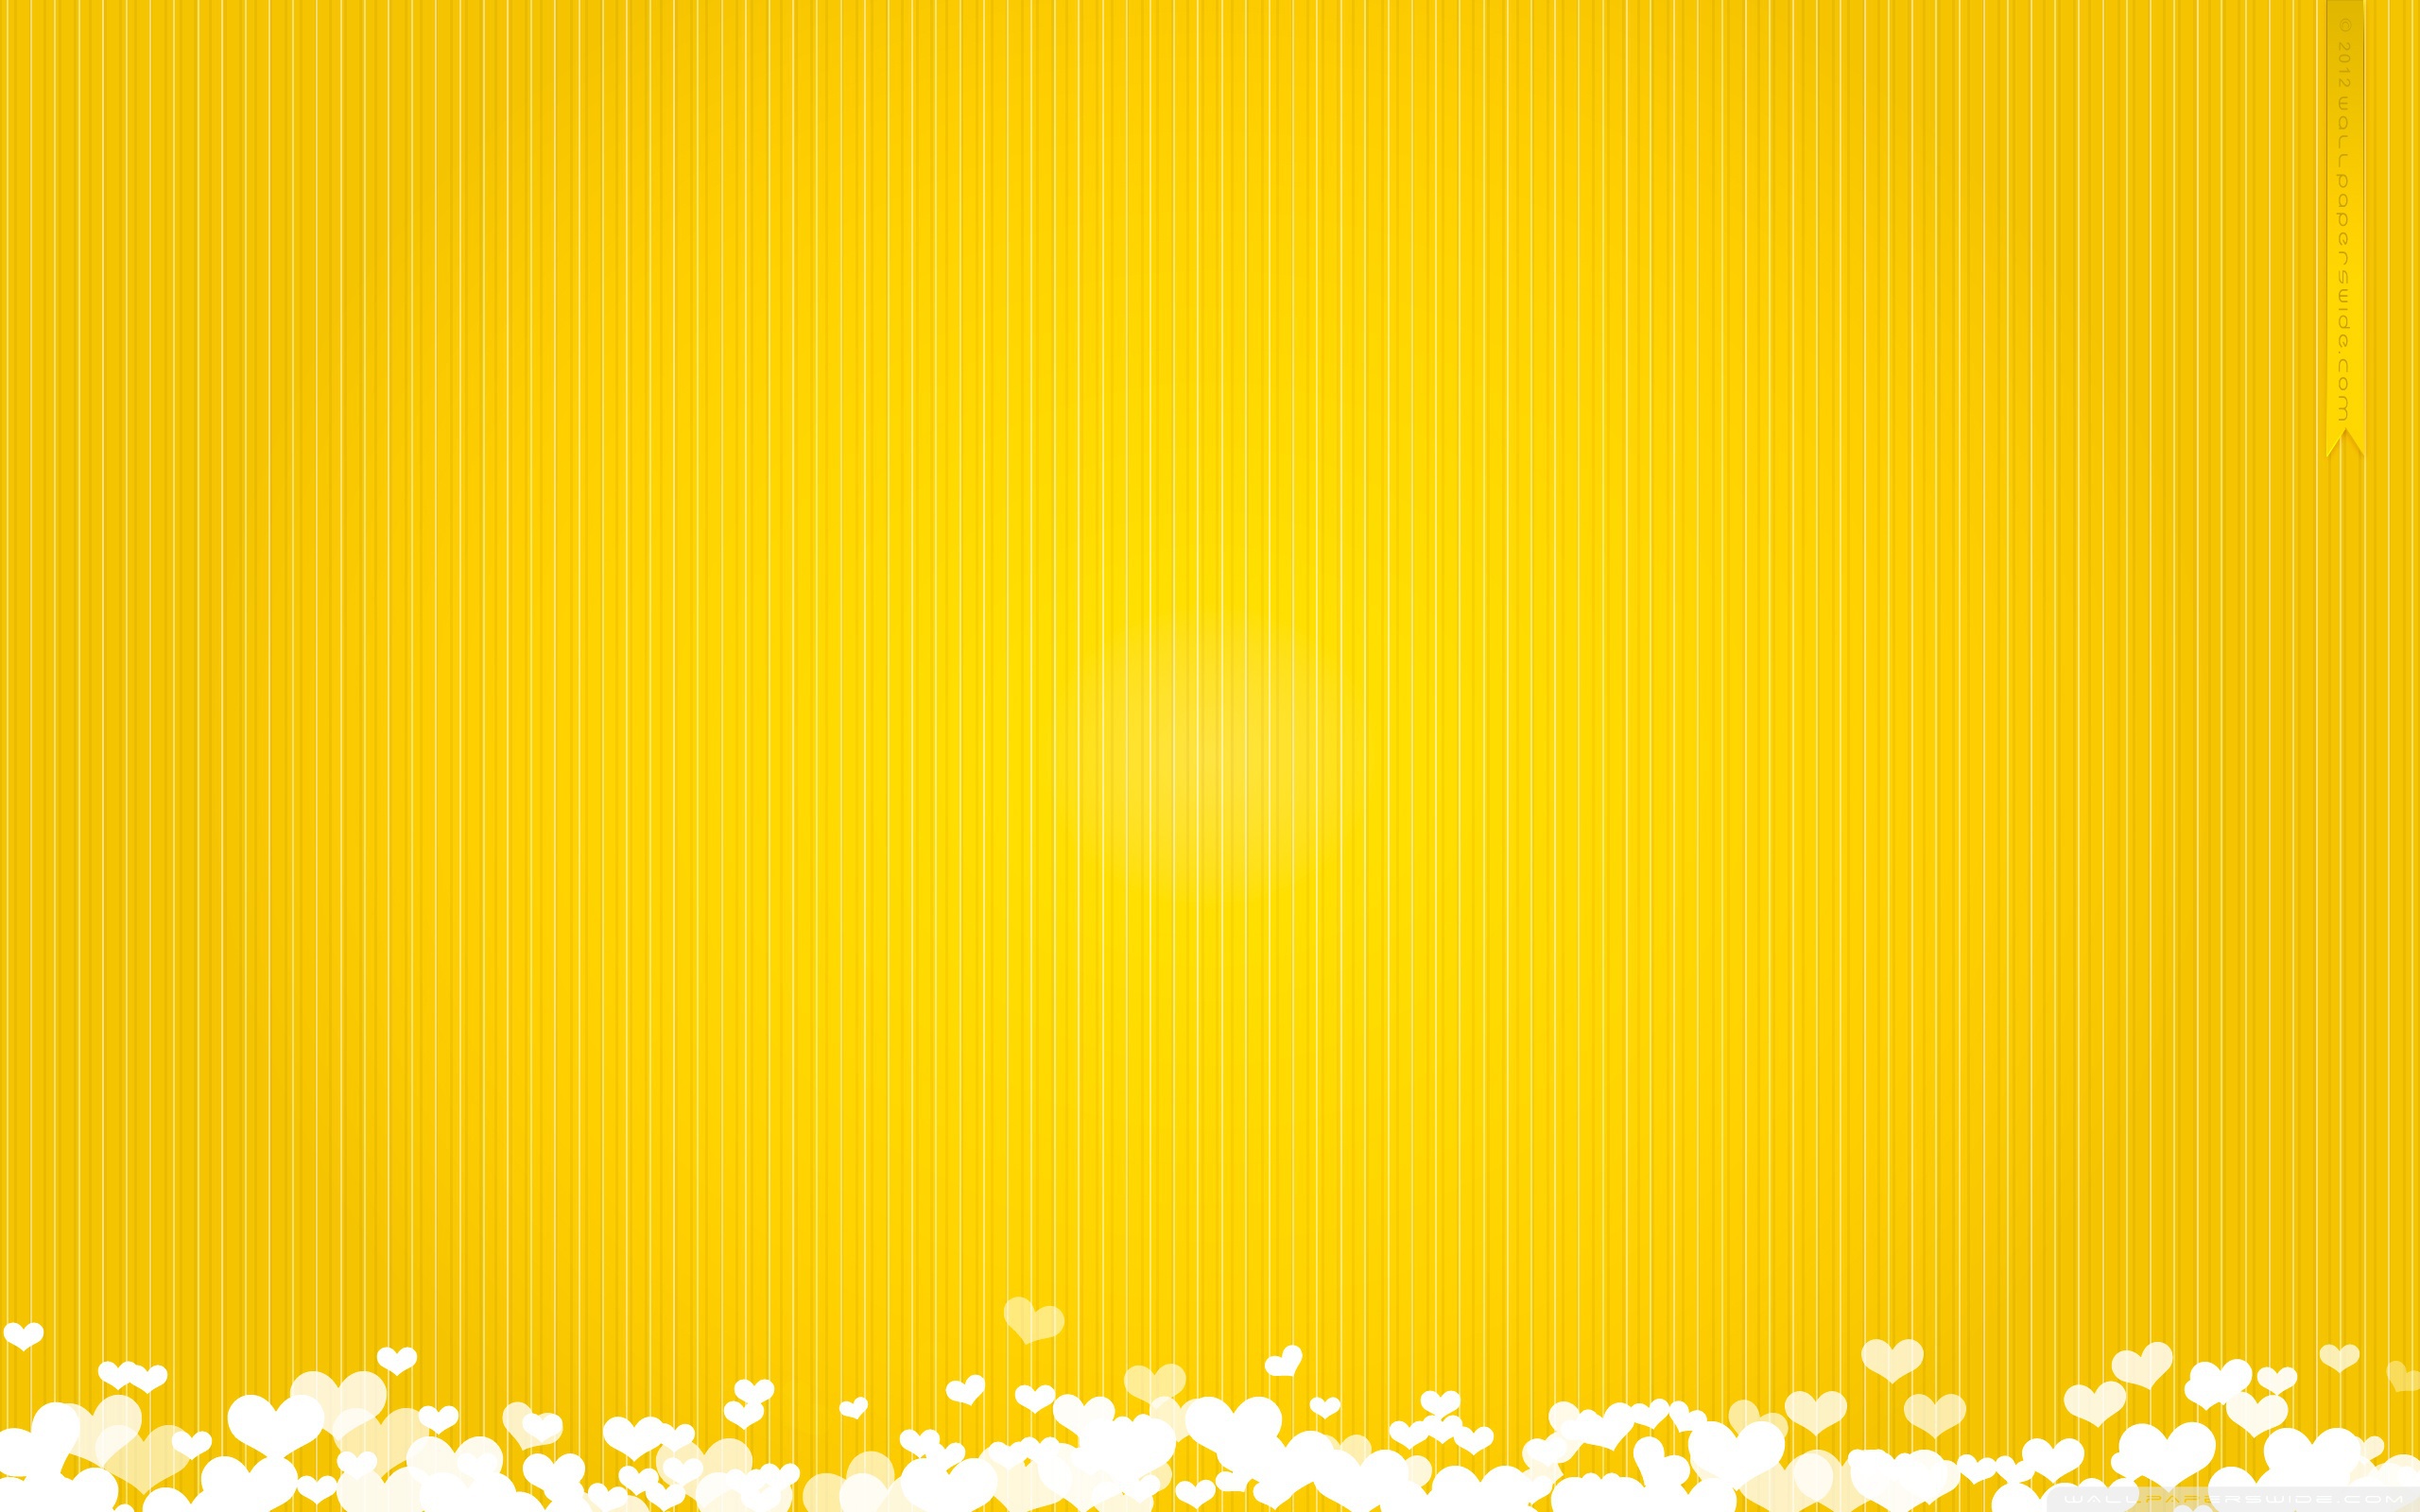 72+] Yellow Background Images - WallpaperSafari